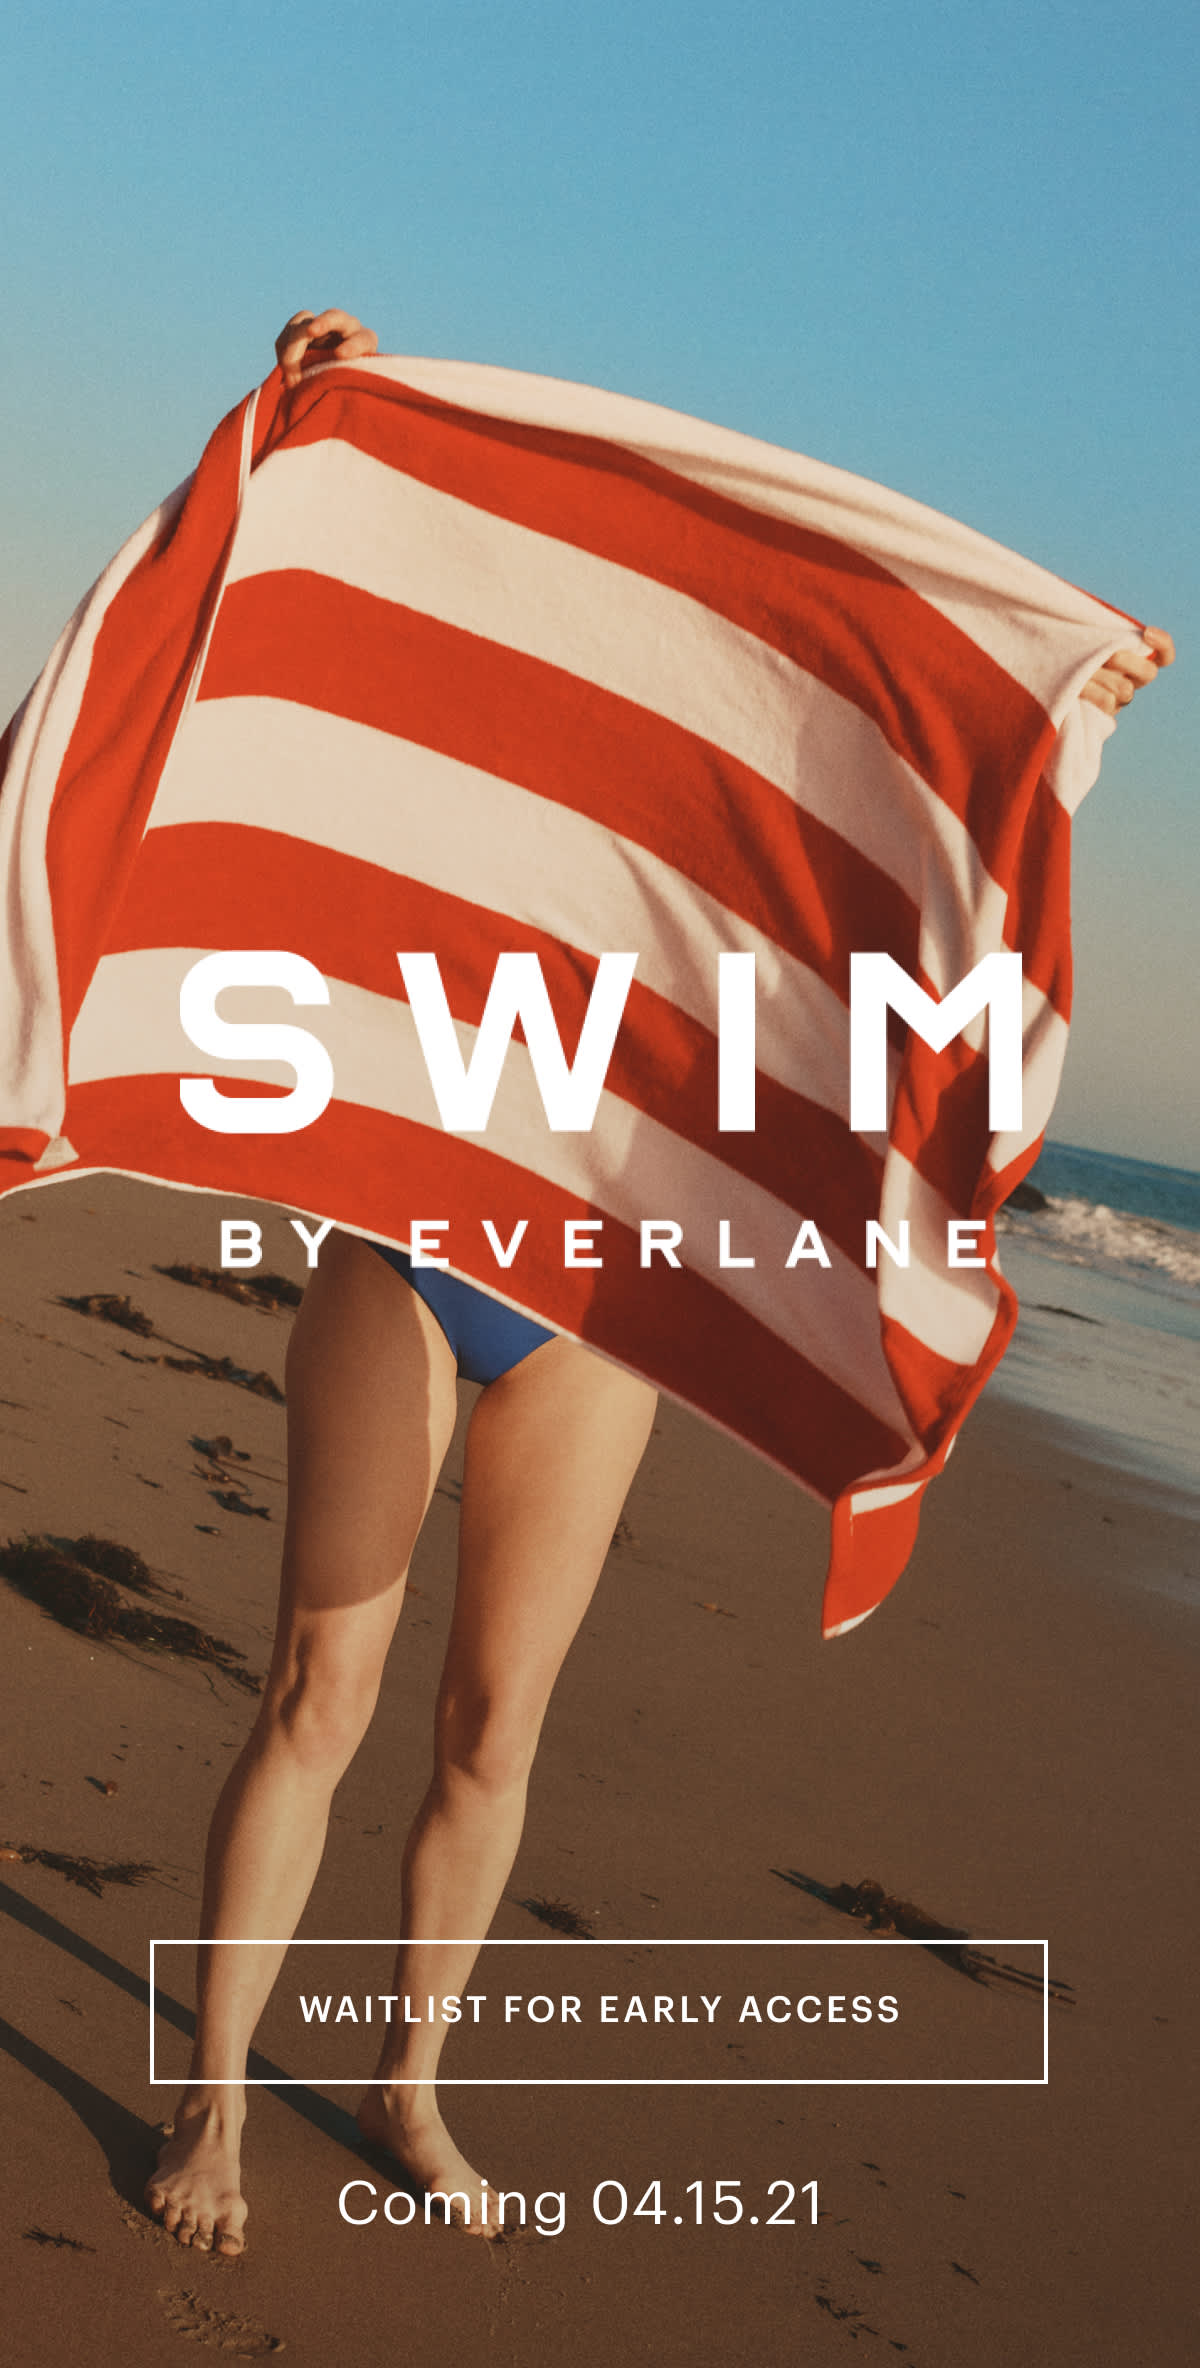 Swim by Everlane. Coming 04.15.21